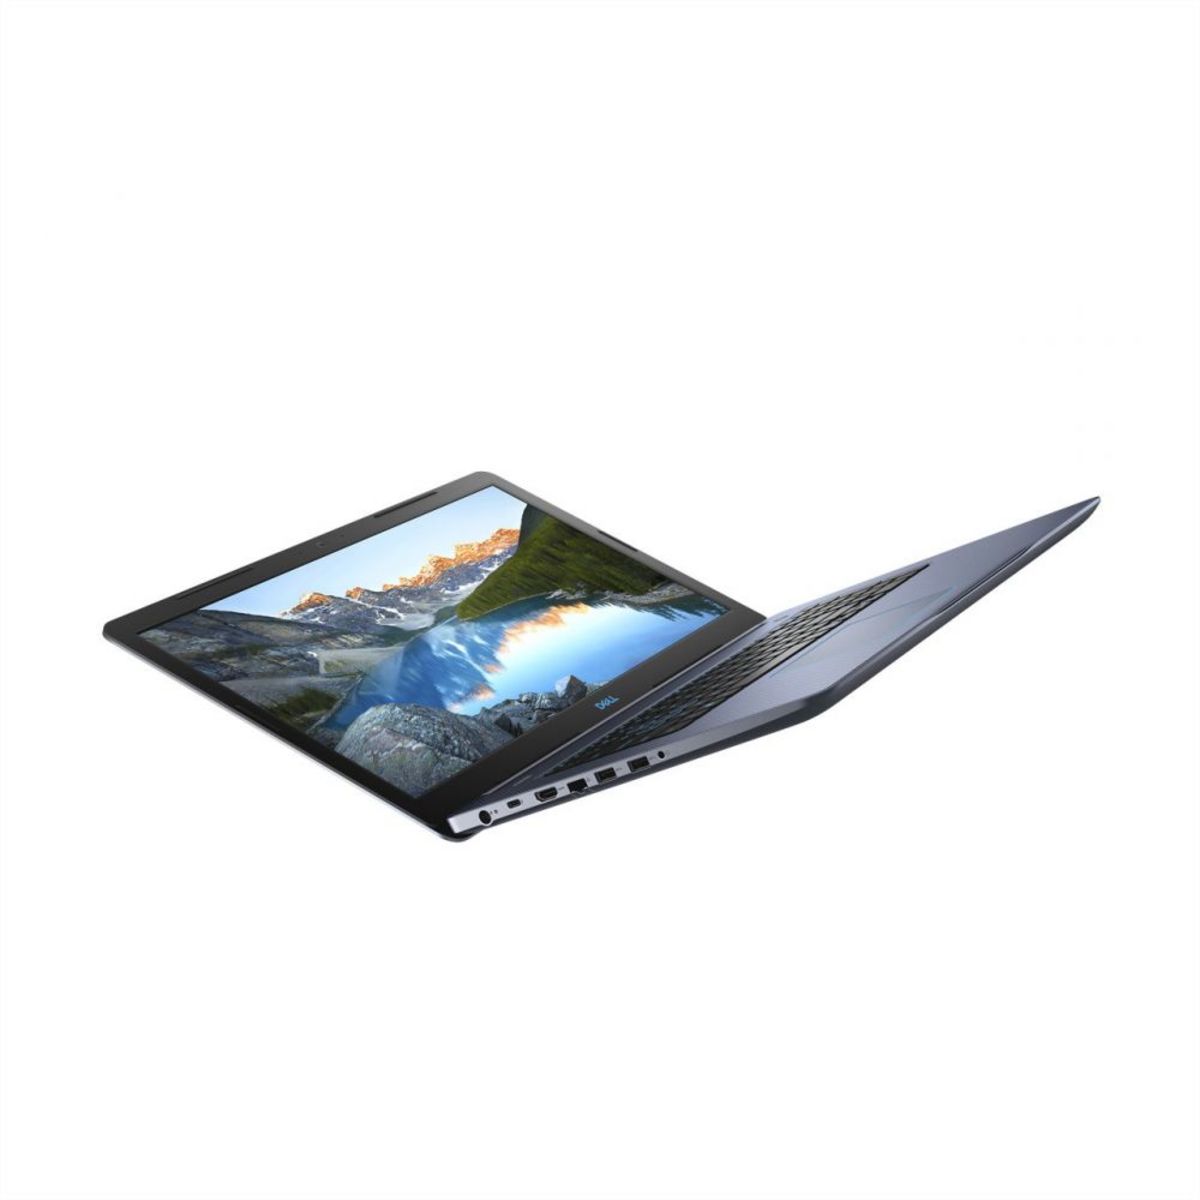 Dell G3 (G3-1242-BLK) Gaming Laptop, Intel Core i5-8300H, 15.6 Inch, 1TB, 8GB RAM, Nvidia GTX 1050 4GB, Windows10, Eng-Ara KB, Black